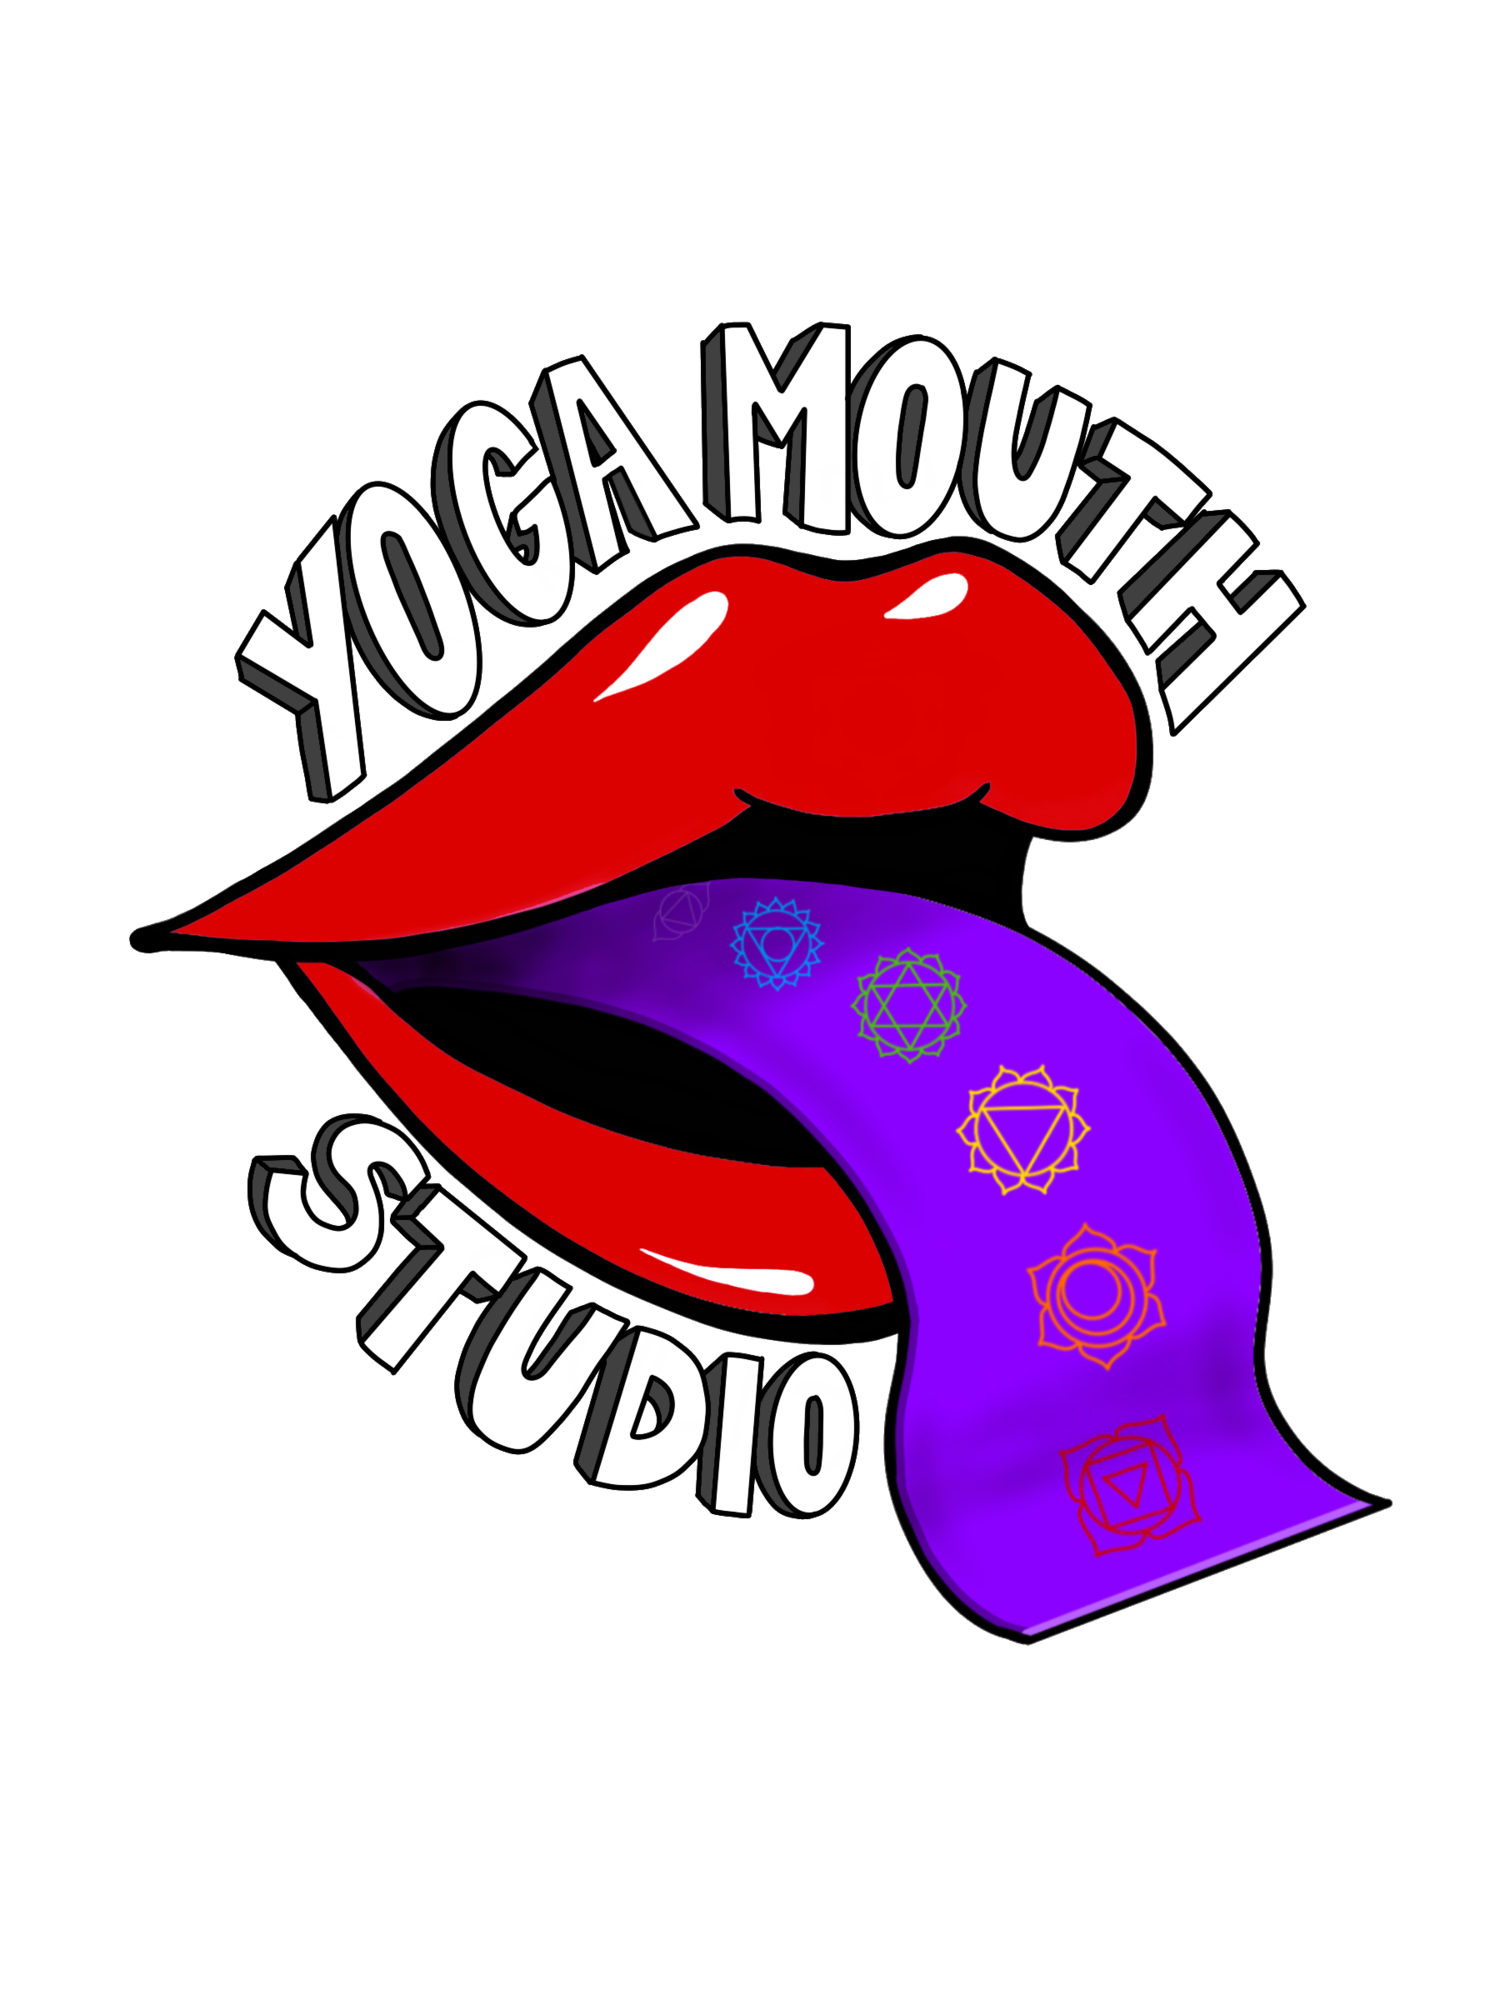 Yoga Mouth Studio